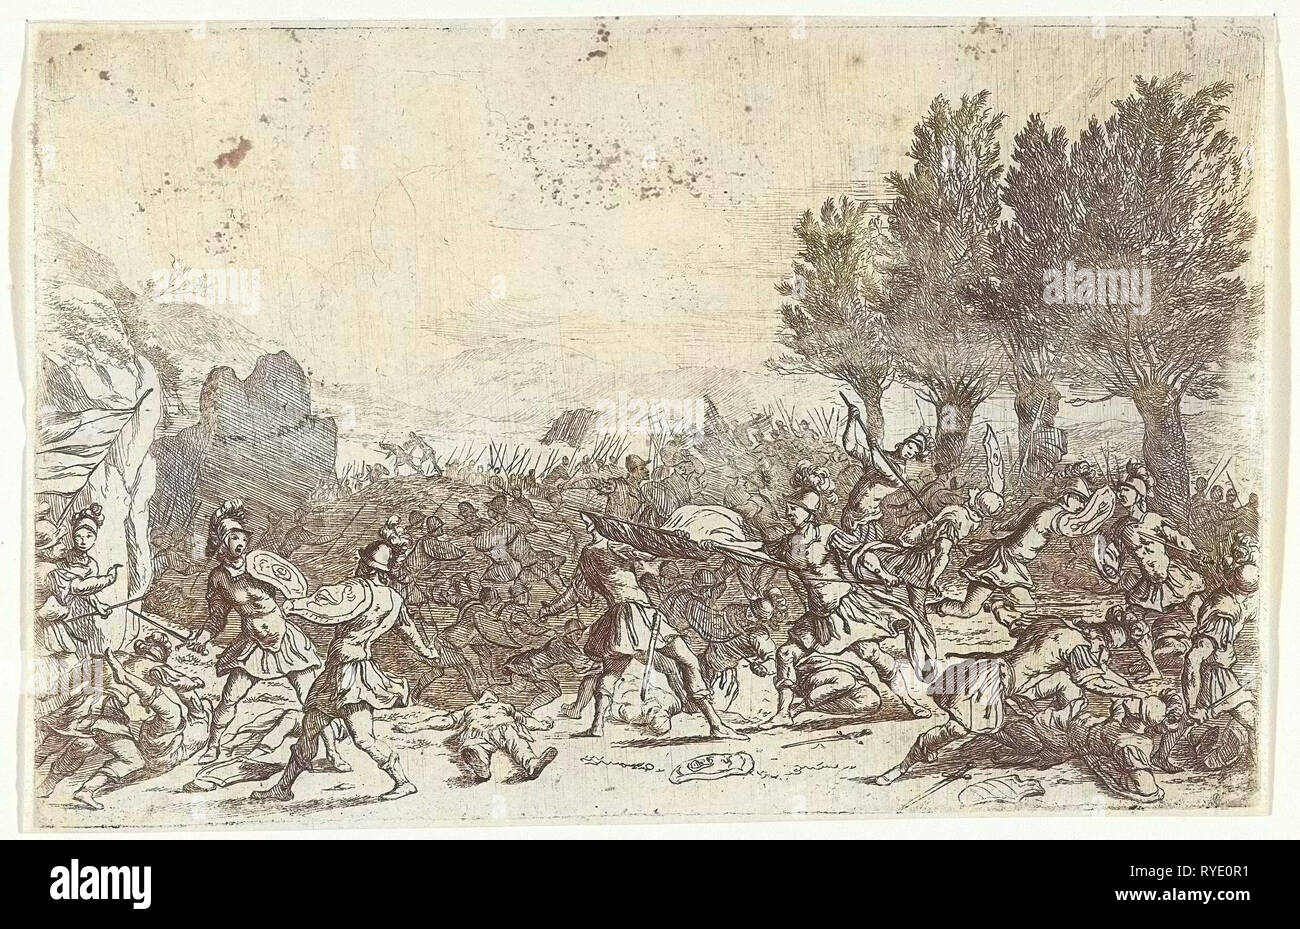 La battaglia, Jan van Ossenbeeck, 1647 - 1674 Foto Stock